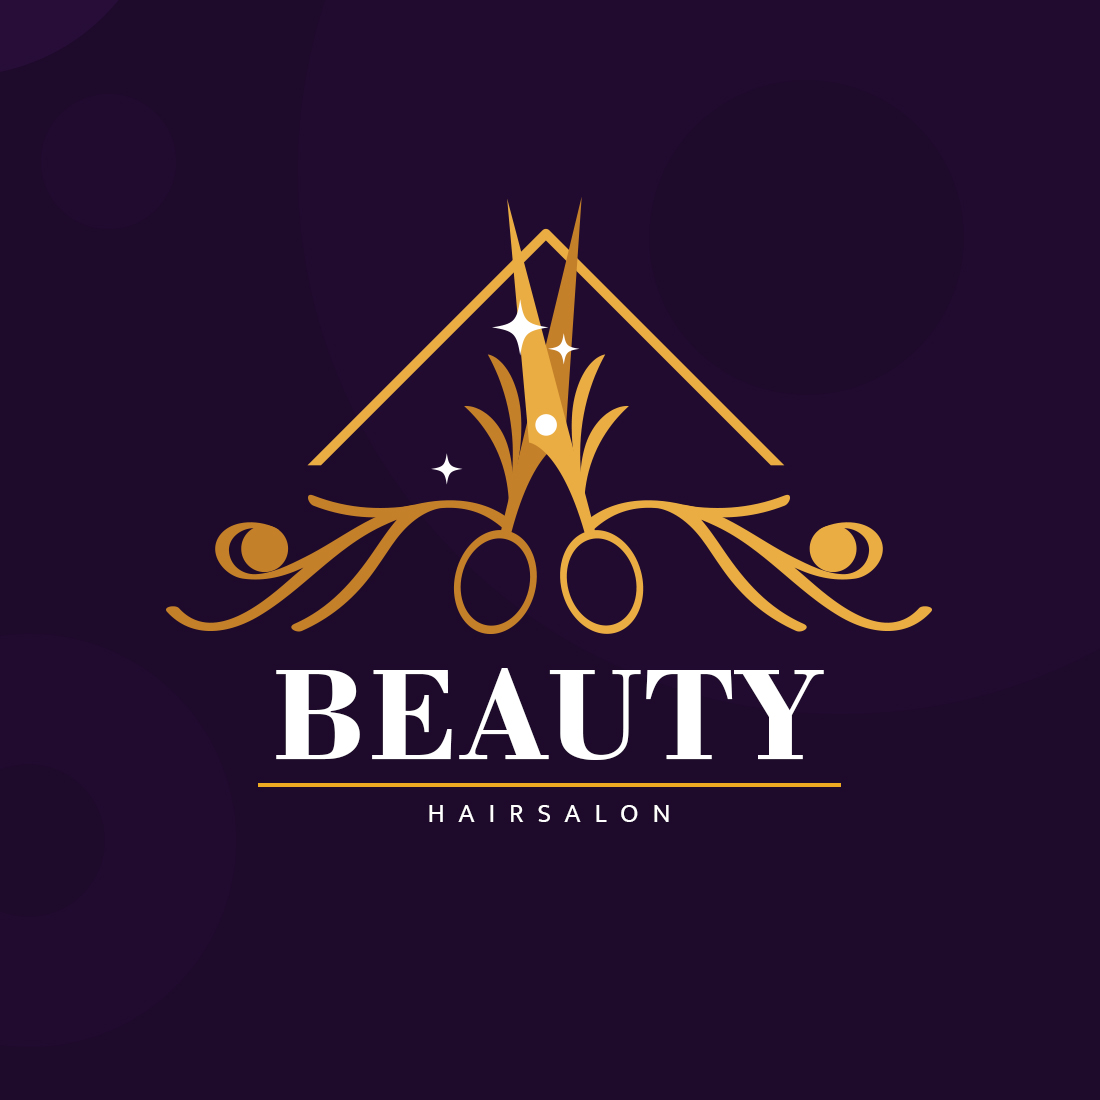 Beauty Hairsalon Logo Design l Salon Logo Design l Shop Logo cover image.